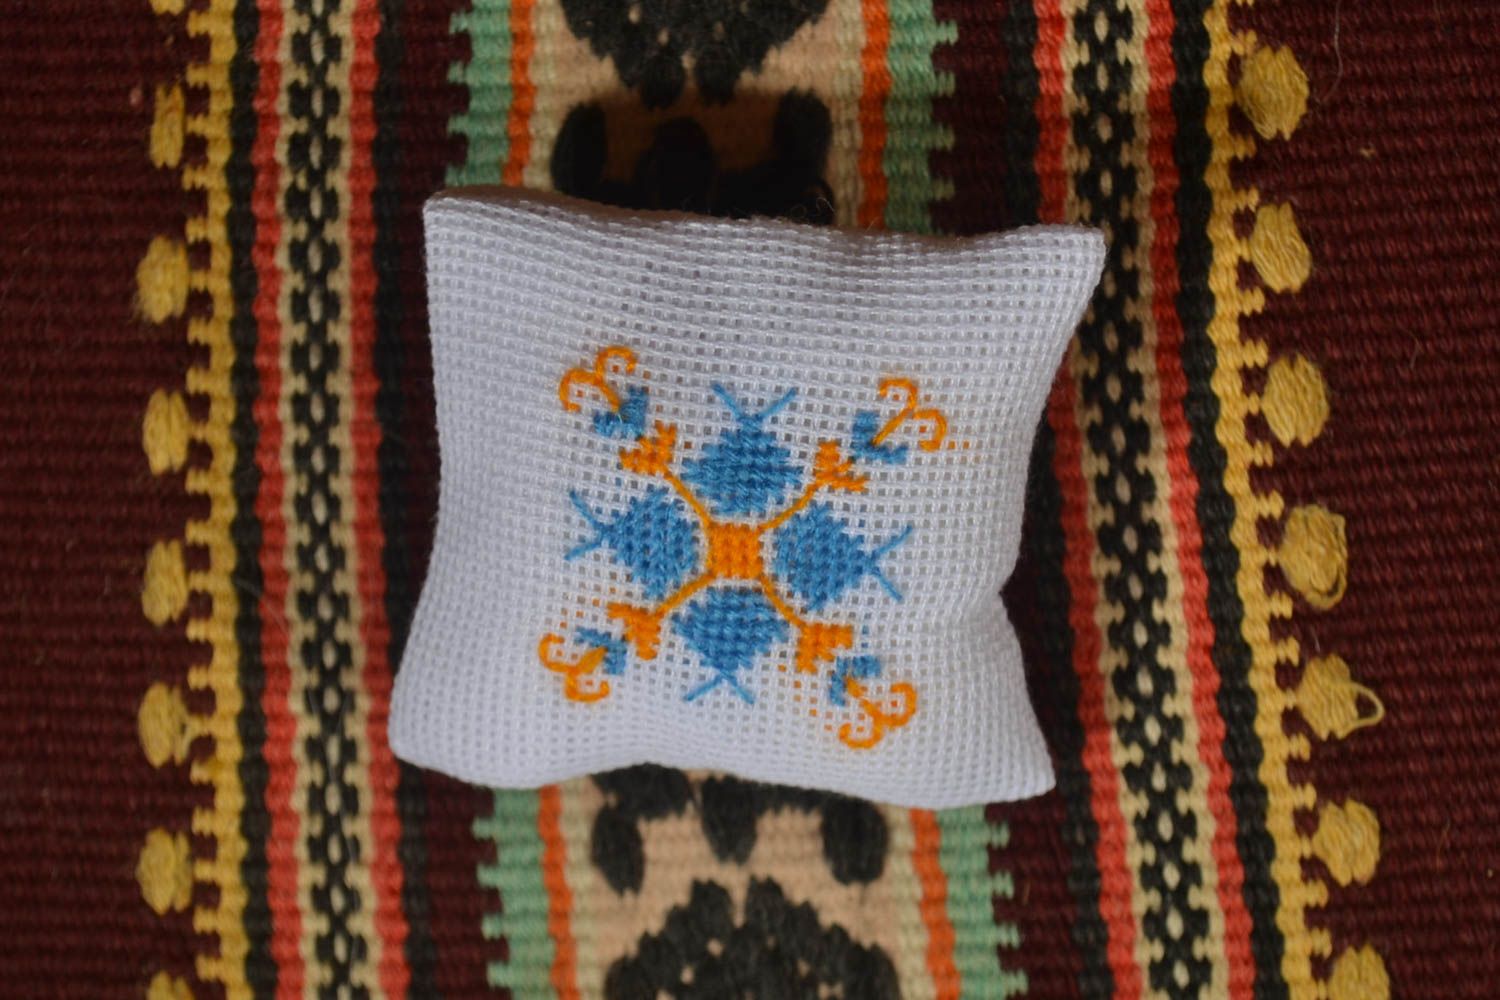 Handmade pincushion sewing accessories pin cushion embroidery supplies  photo 1